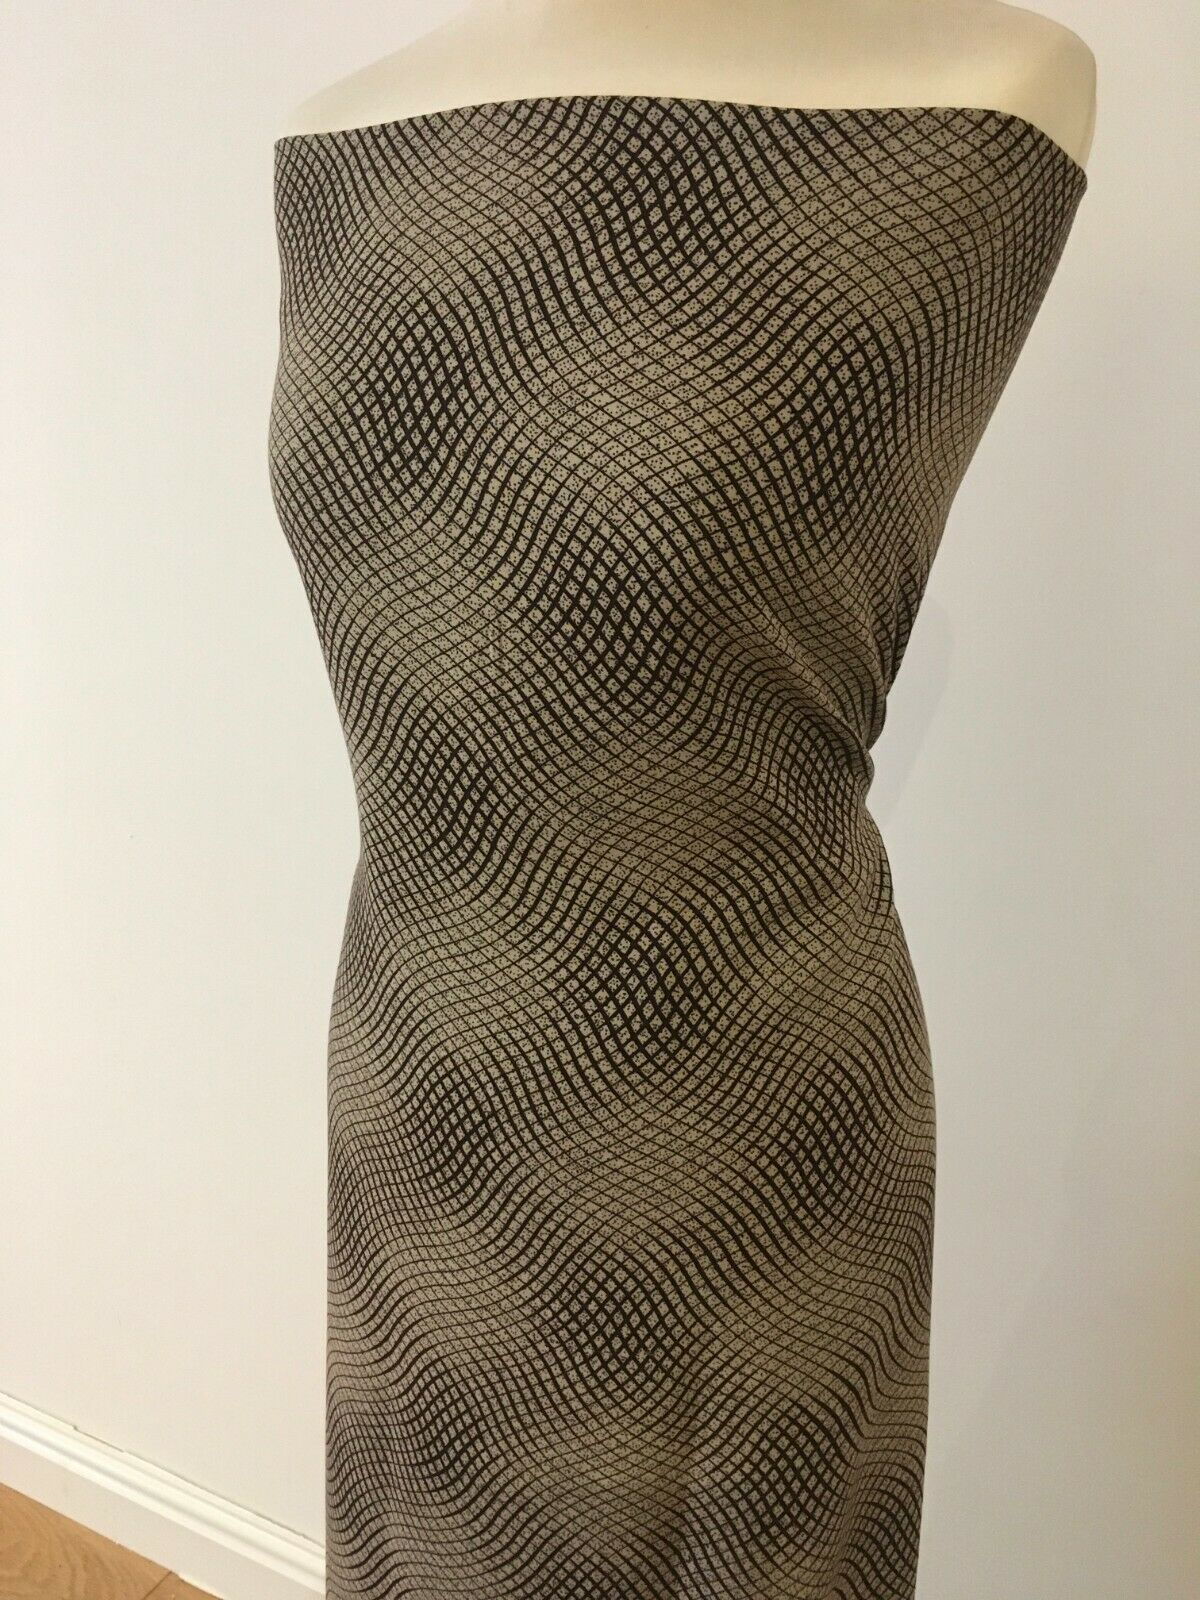 Printed Chalis Viscose dress Fabric 150 cm M1425 Mtex